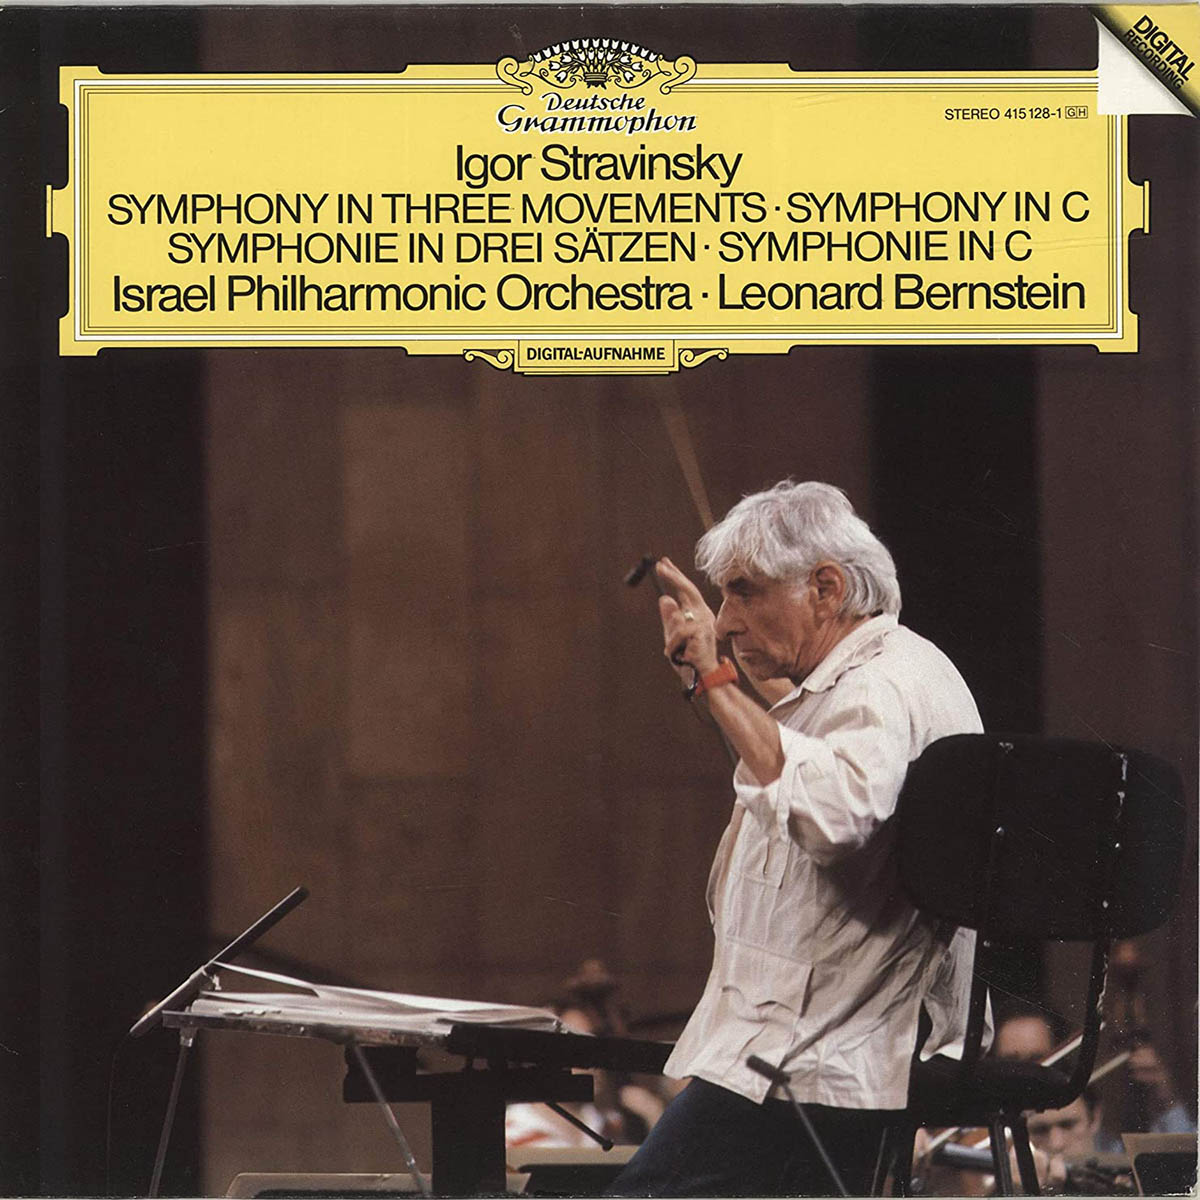 DGG 415 128 Stravinsky Symphonies Bernstein DGG Digital Aufnahme